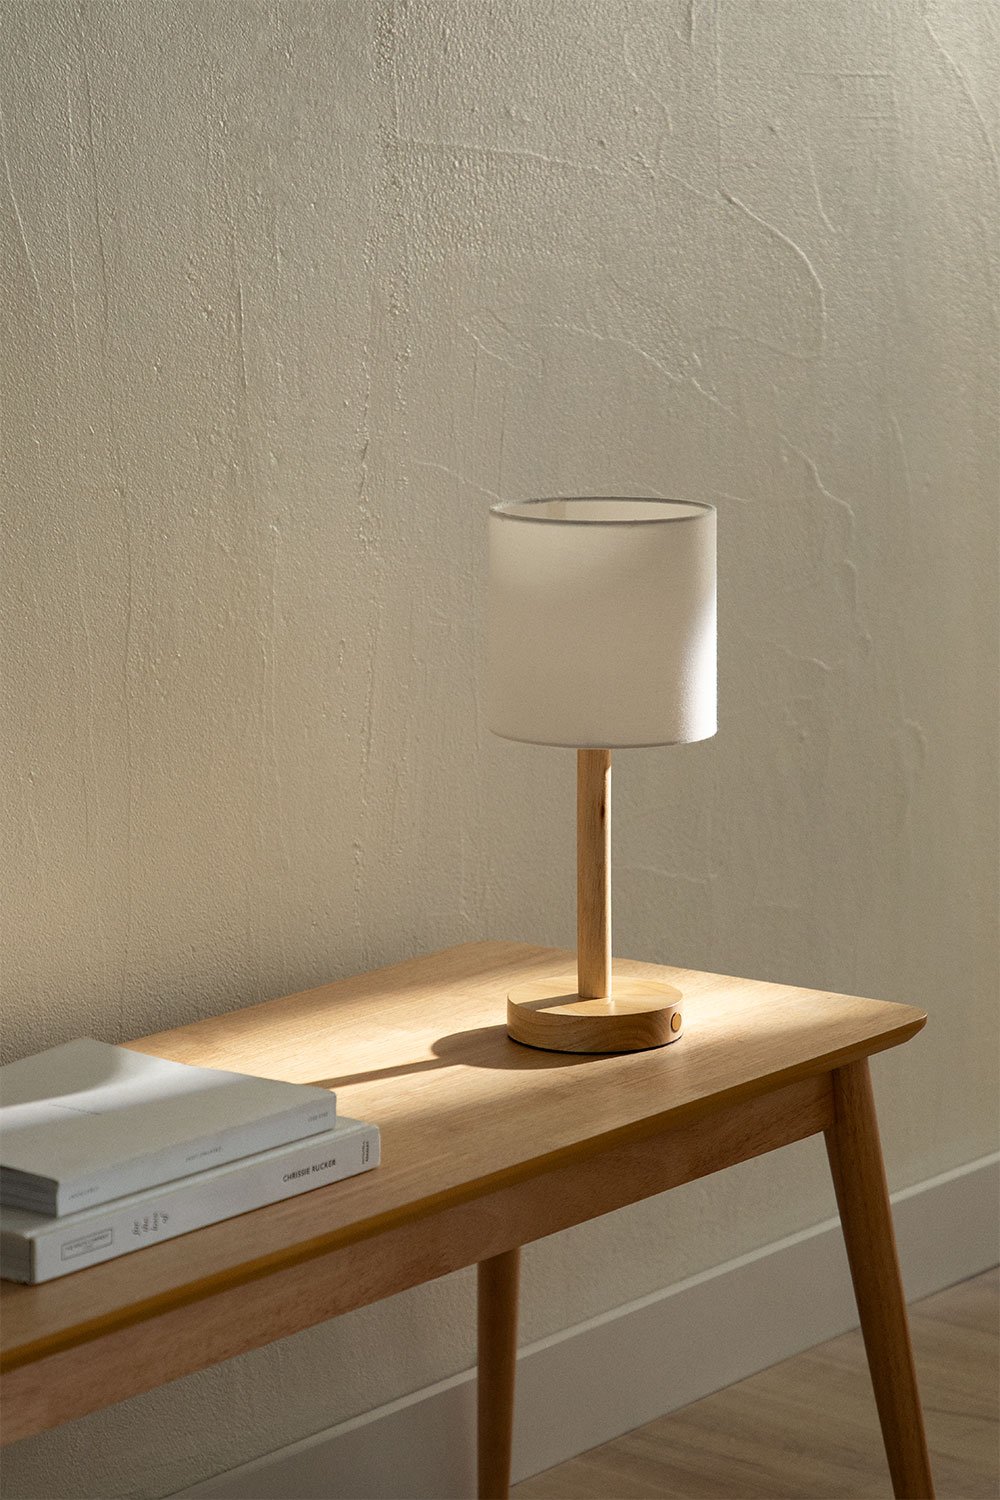 Tulovik cordless wooden table lamp, gallery image 1